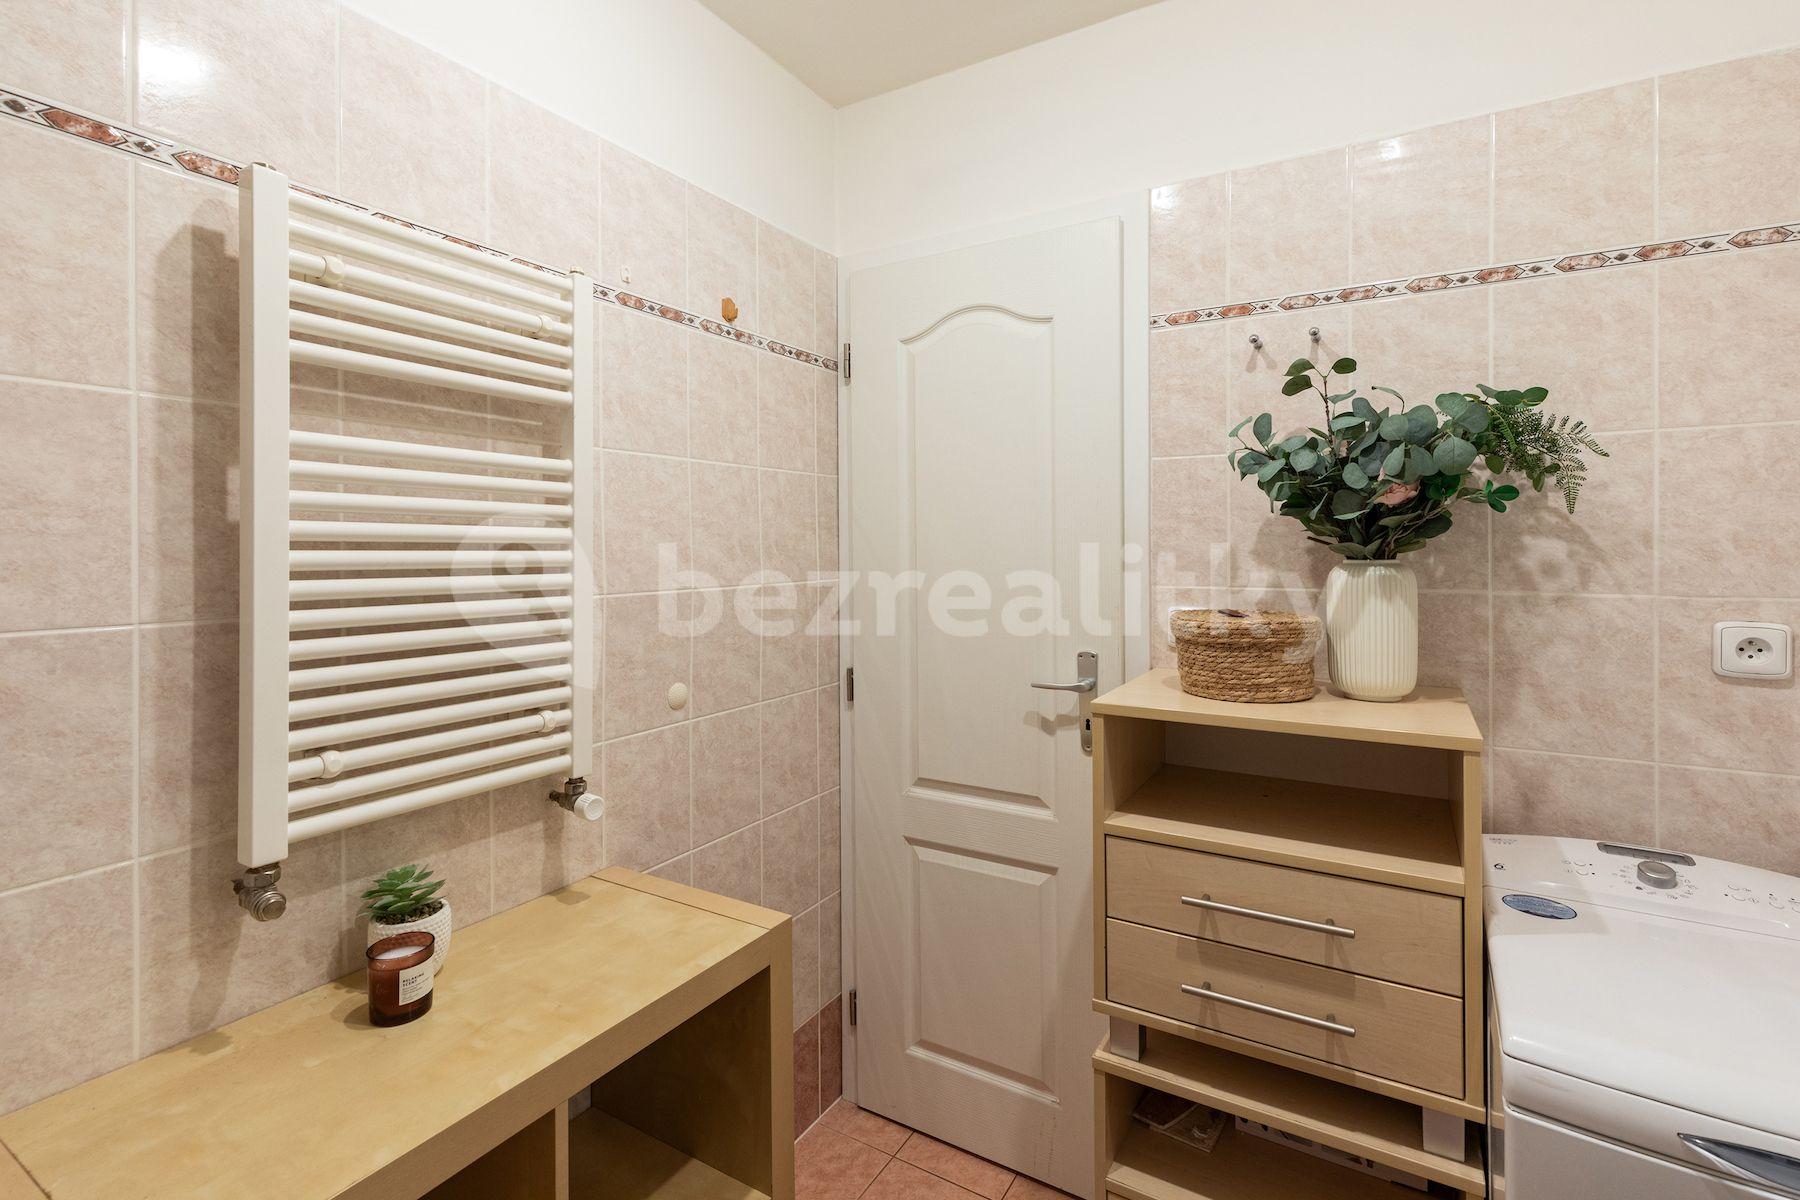 1 bedroom with open-plan kitchen flat for sale, 49 m², Hnězdenská, Prague, Prague